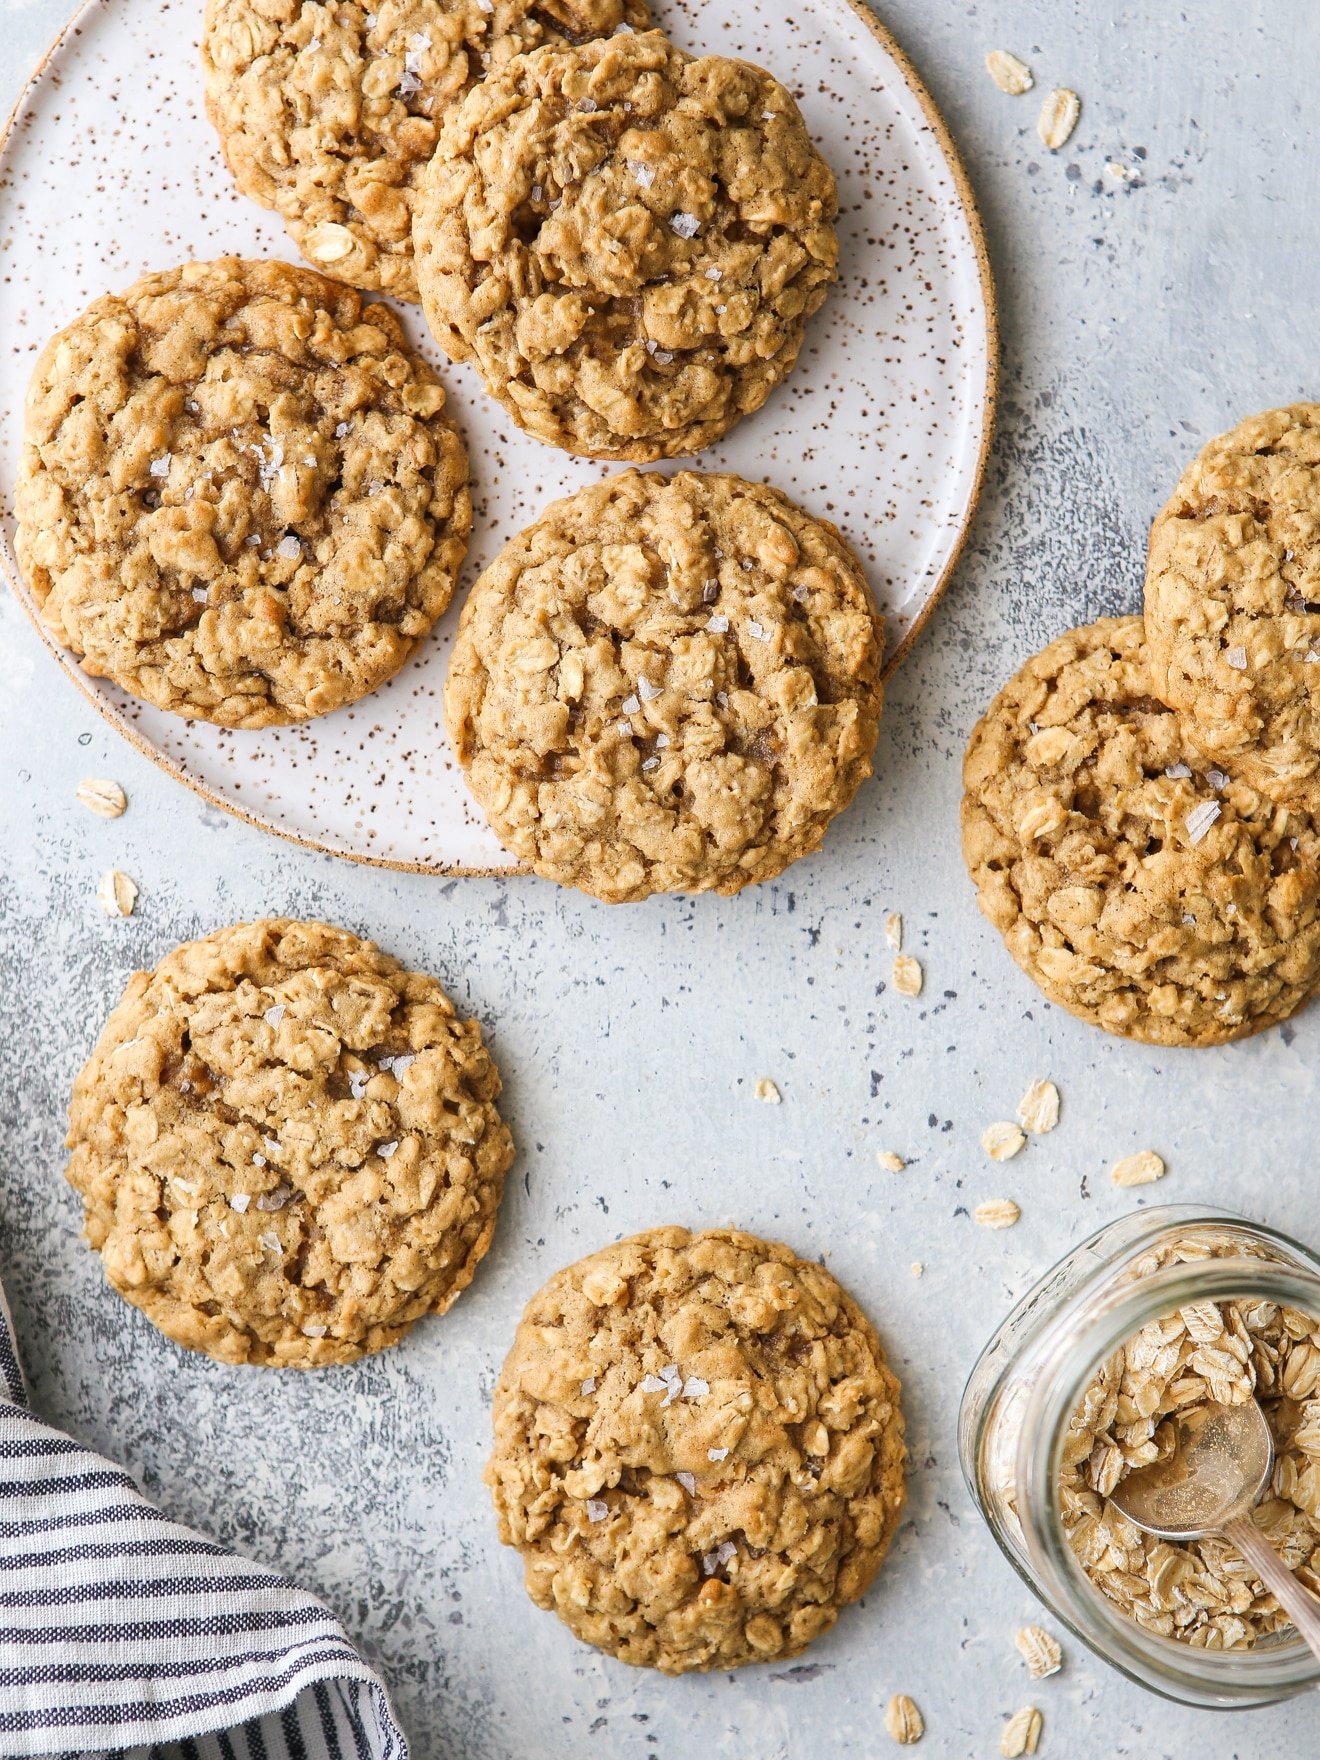 Best Oatmeal Cookies Recipe - How to Make Oatmeal Cookies